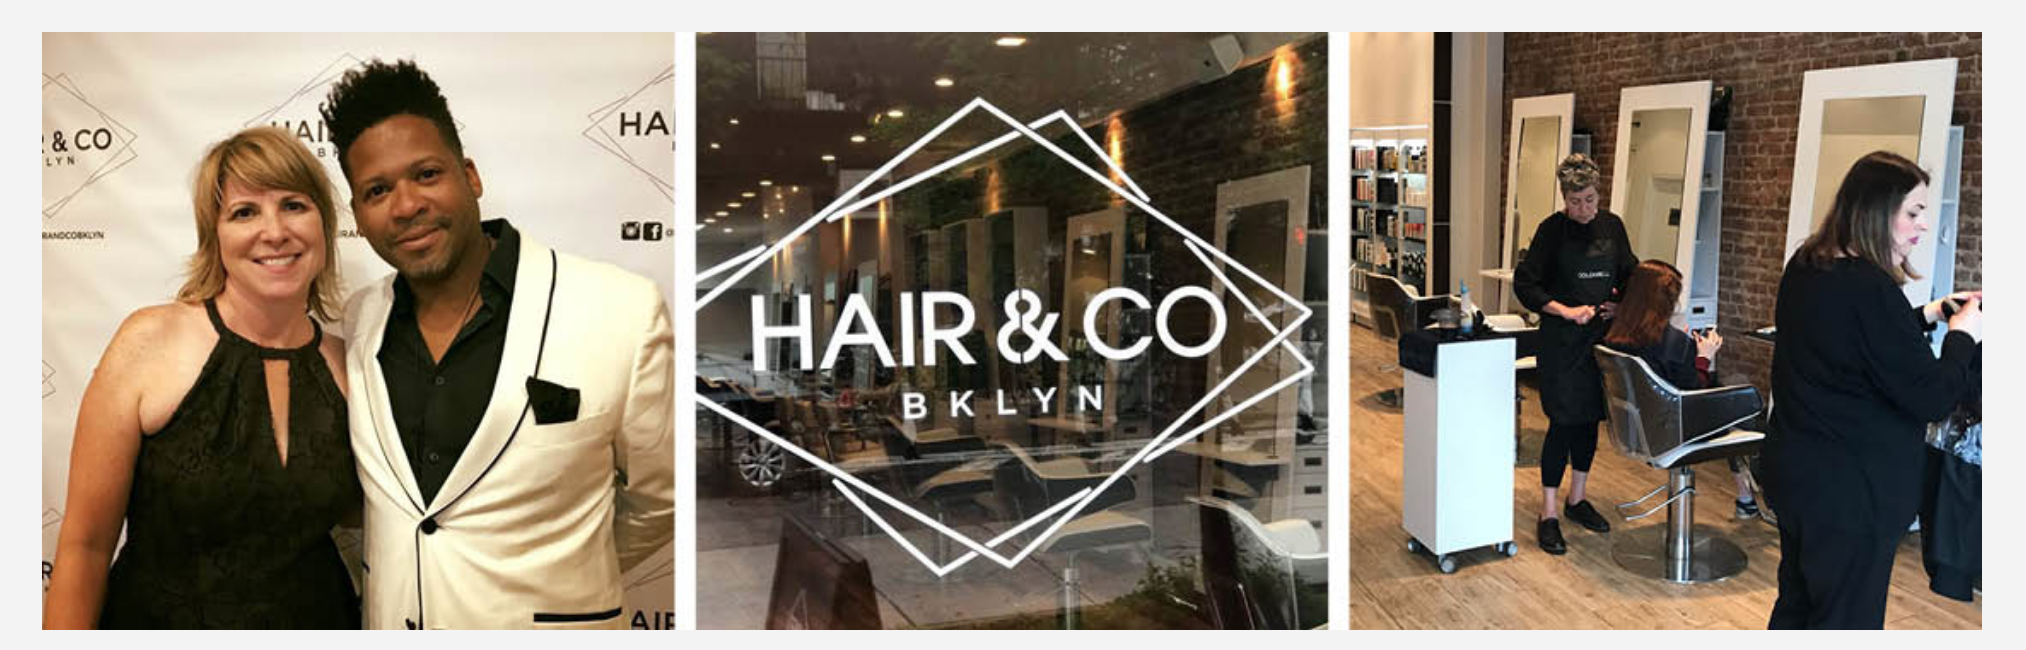 Hair & Co BKLYN Goldwell KMS Hair Salon Brooklyn New York